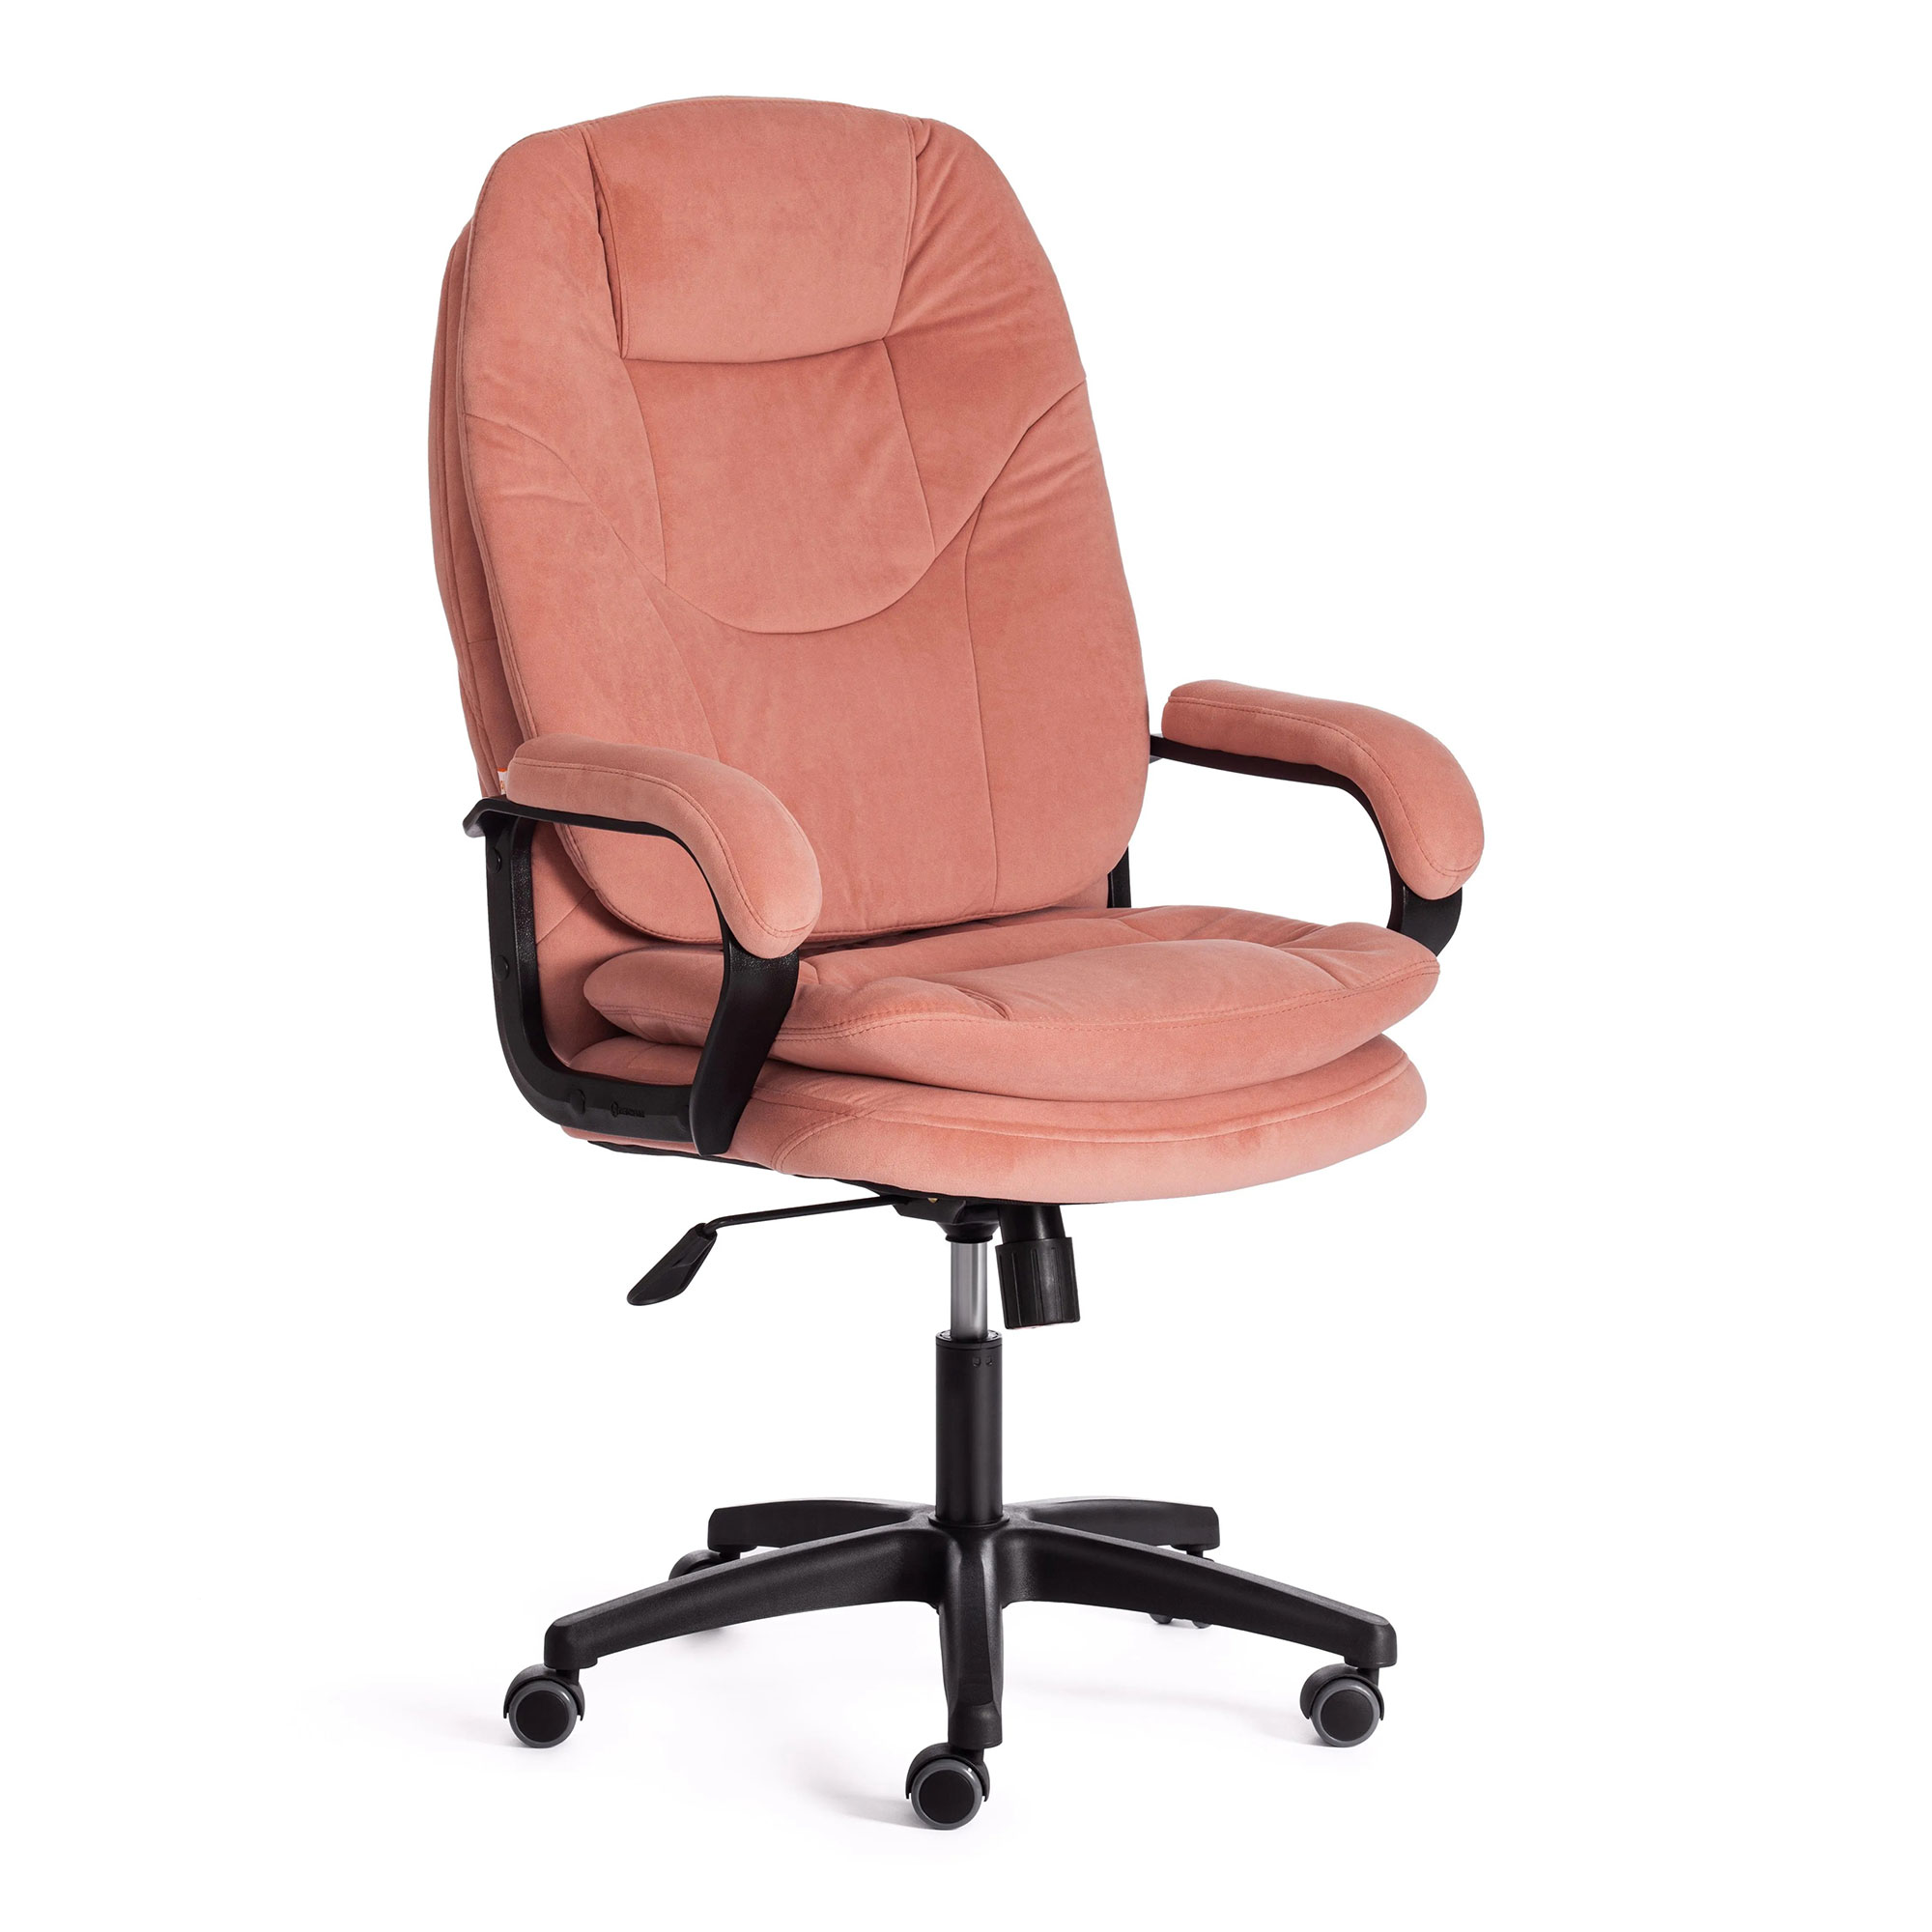 Компьютерное кресло TC Comfort розовое 66х46х133 см (19385) компьютерное кресло tc comfort чёрное 66х46х133 см 19388